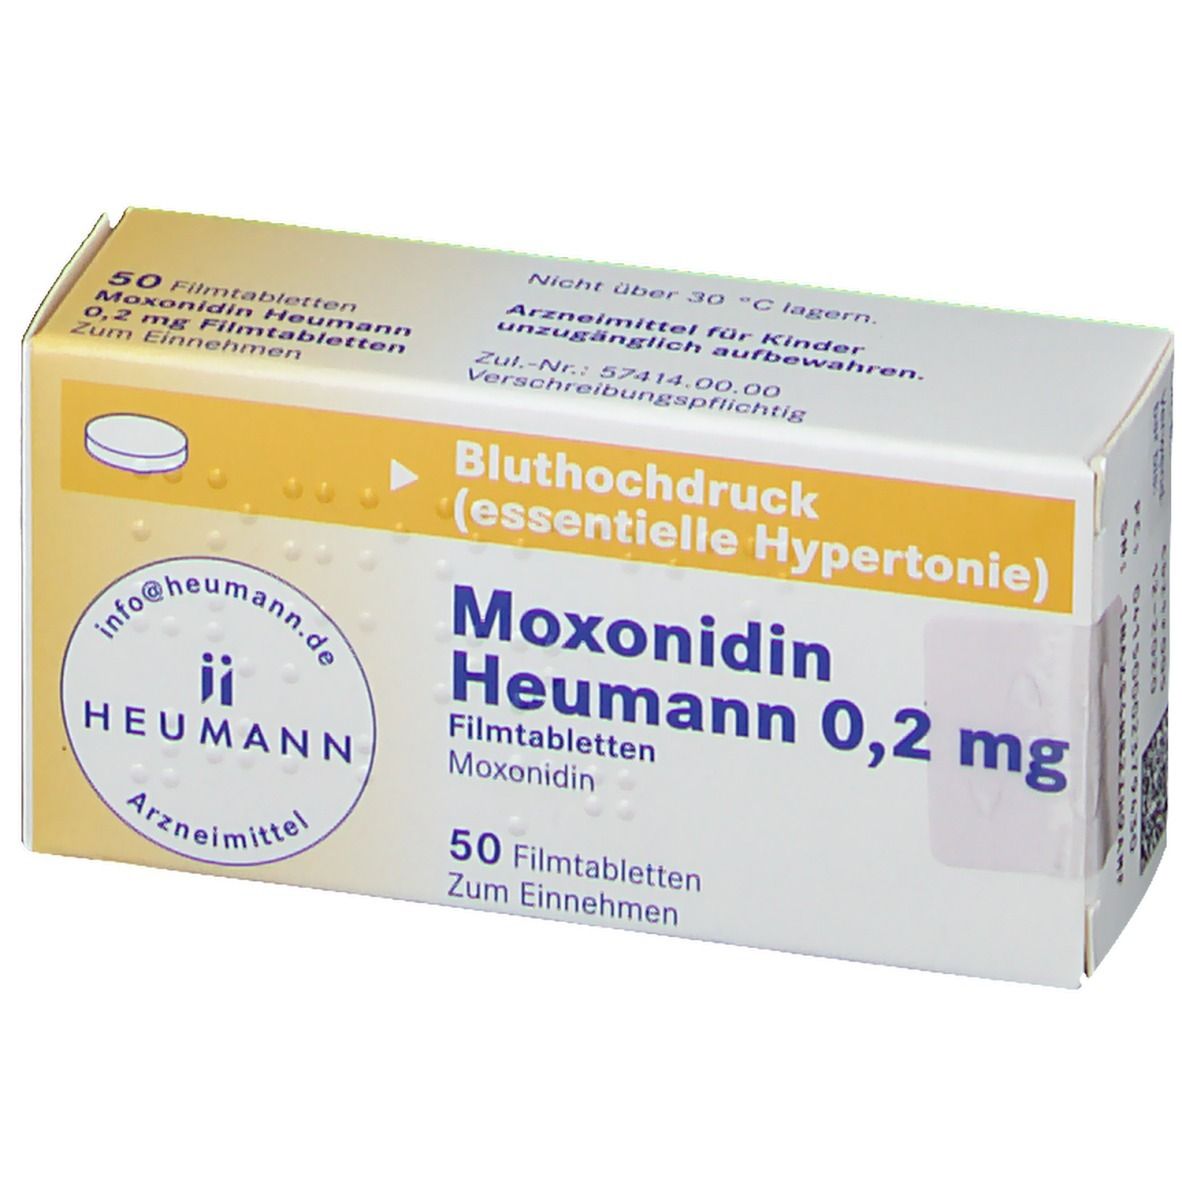 Moxonidin Heumann 0,2 mg